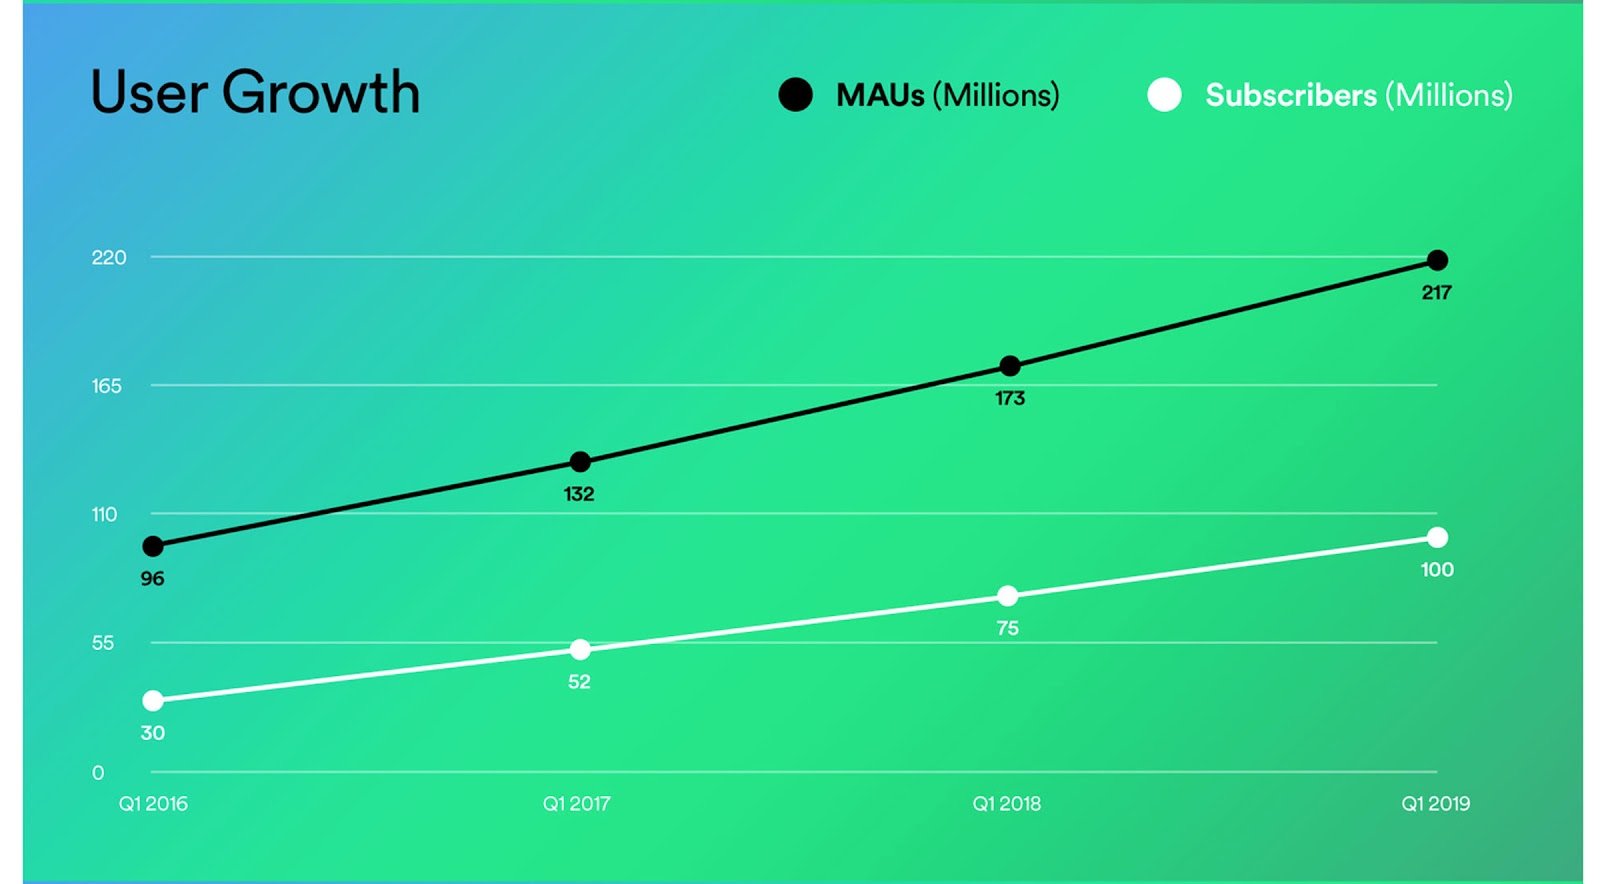 Spotify اکنون 100 میلیون مشترک پولی و 217 میلیون کاربر فعال ماهانه دارد.  بازاریابی نمونه محصول 